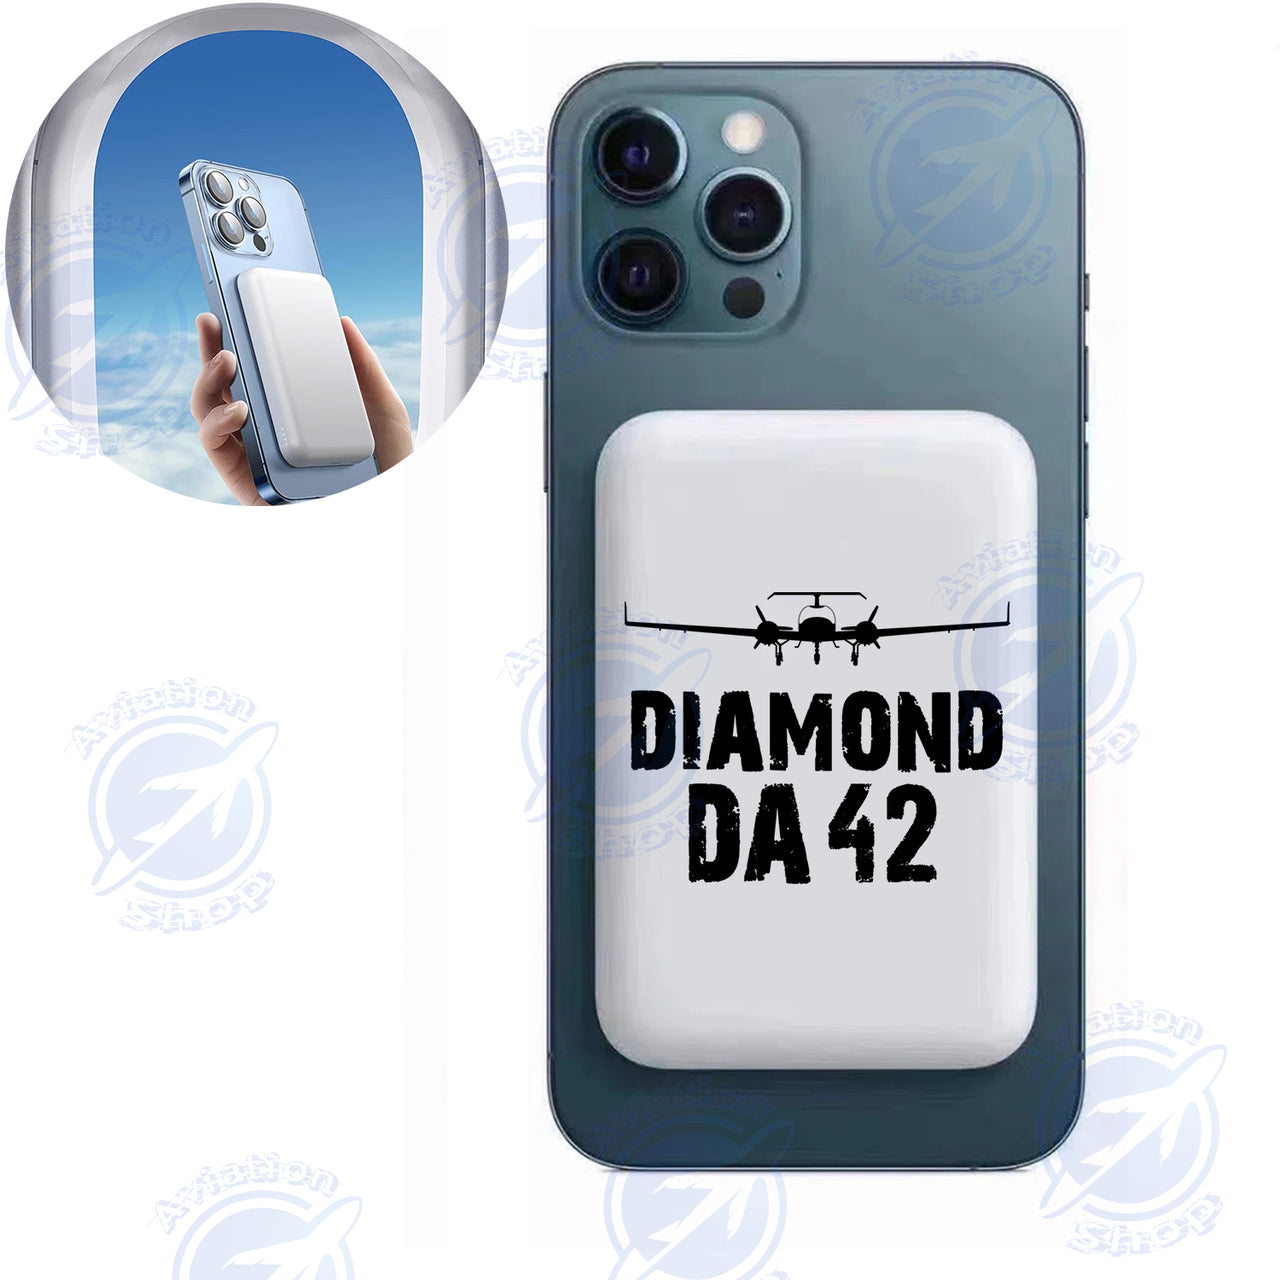 Diamond DA42 & Plane Designed MagSafe PowerBanks